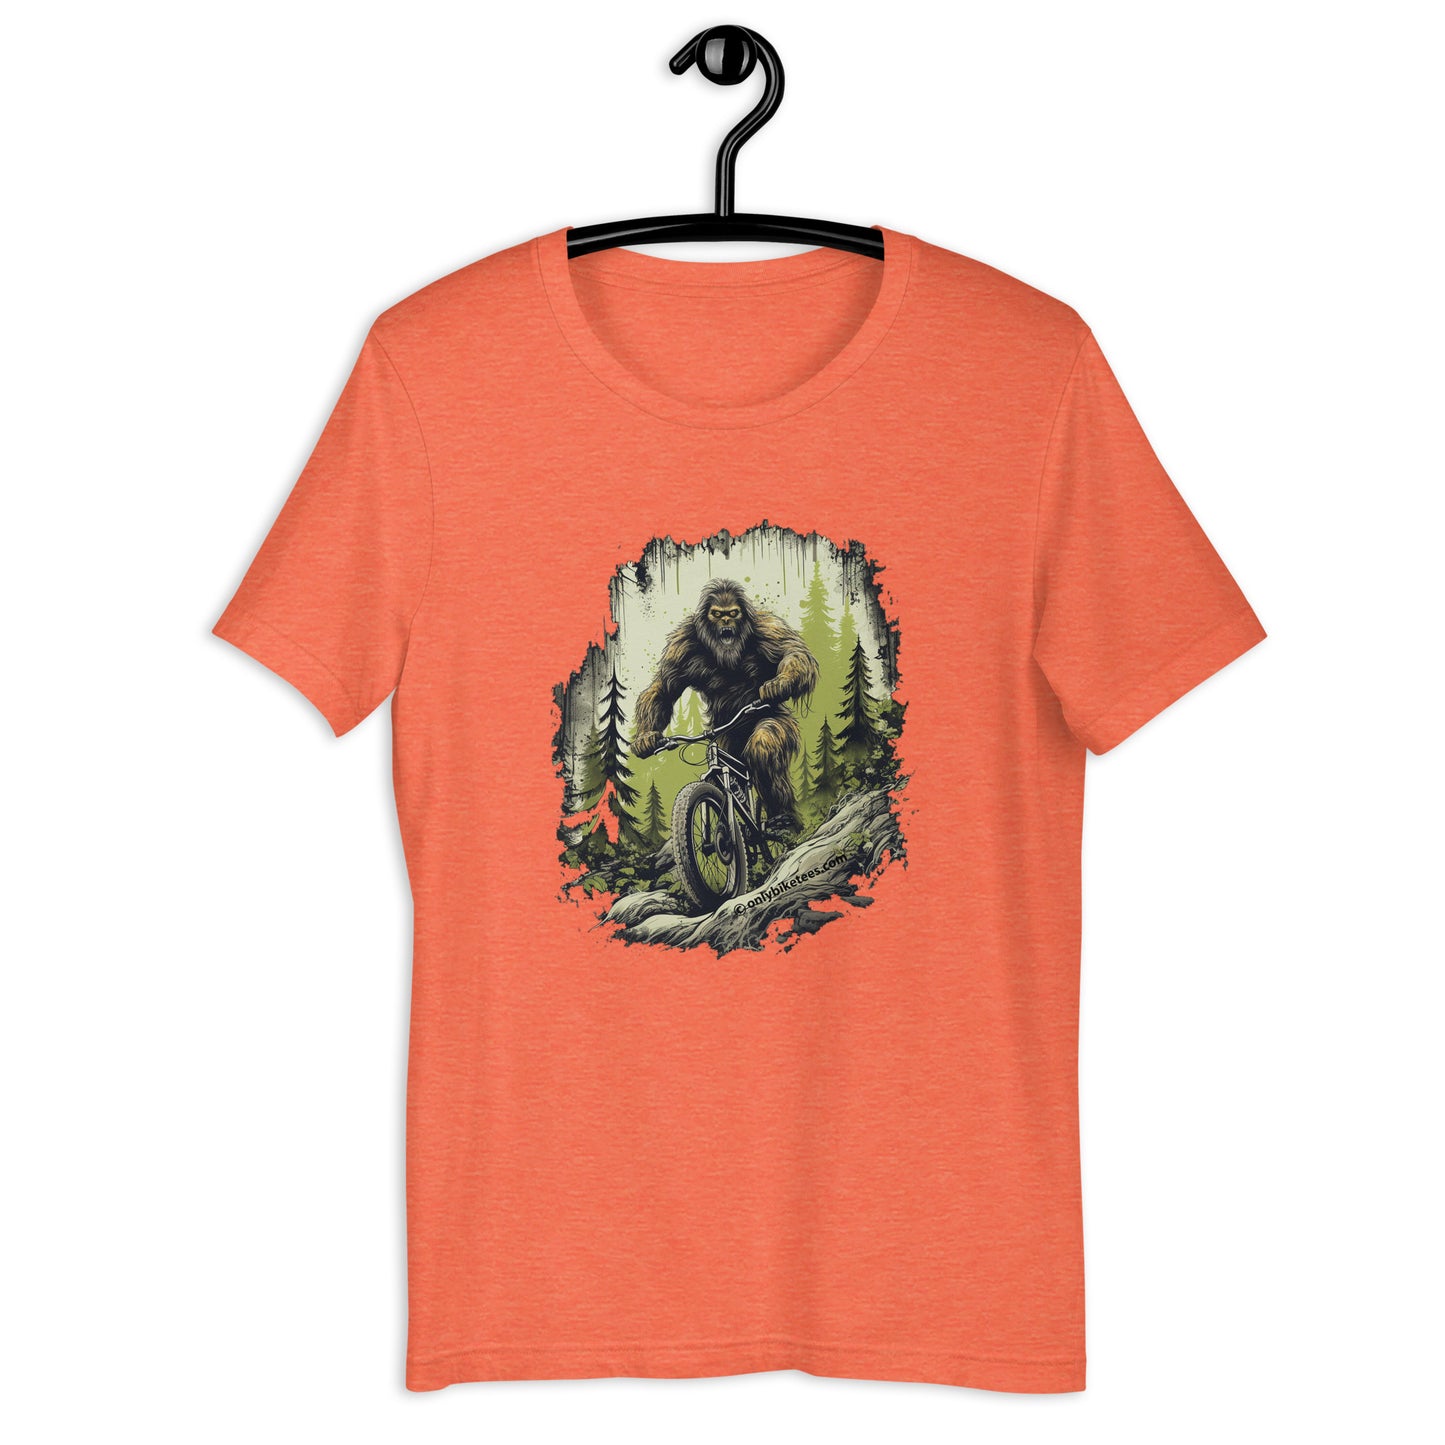 Bigfoot on Mountain Bike Unisex t-shirt